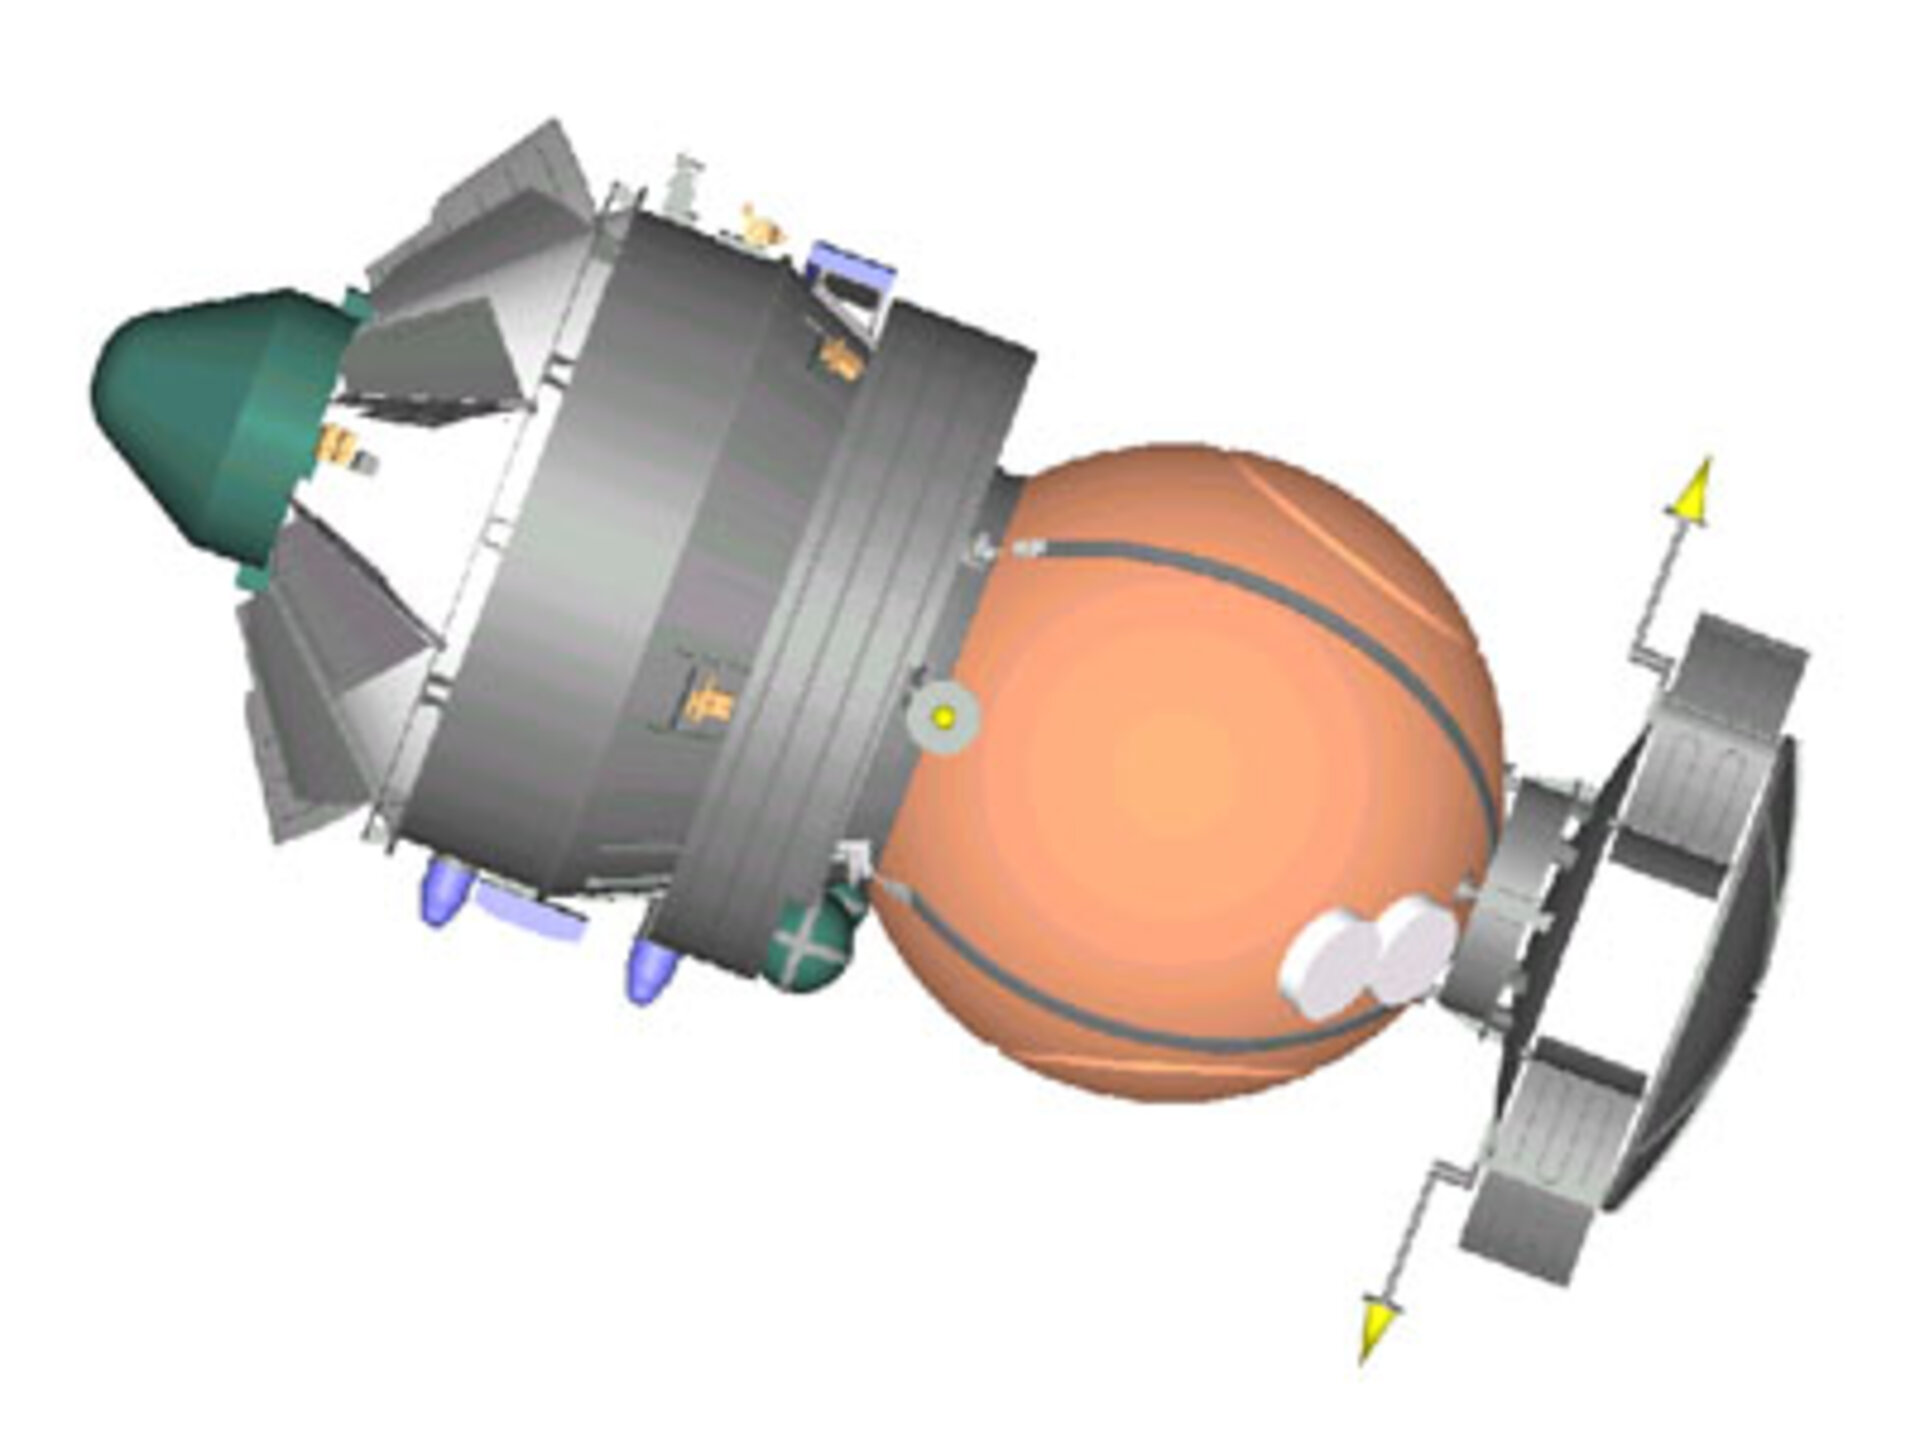 The Soyuz launcher was carrying Foton M-1